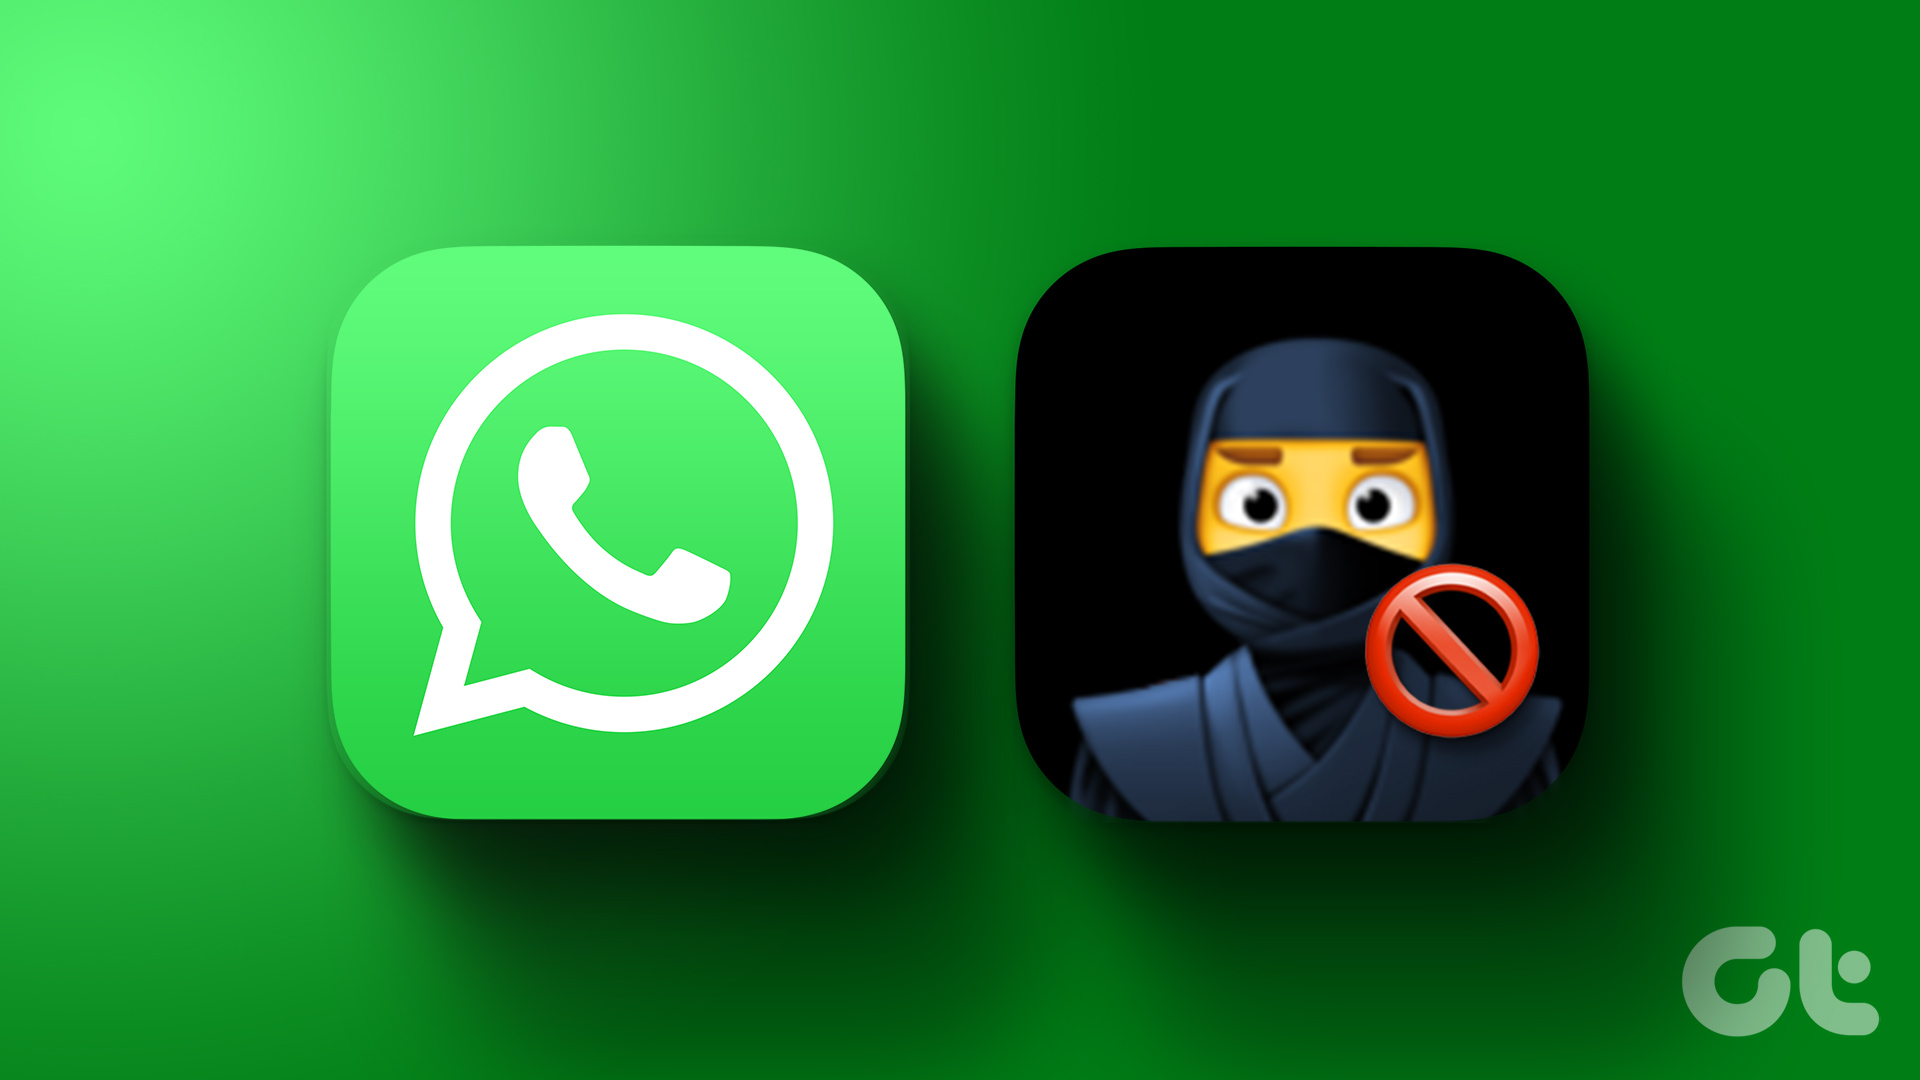 WhatsApp block unknown numbers